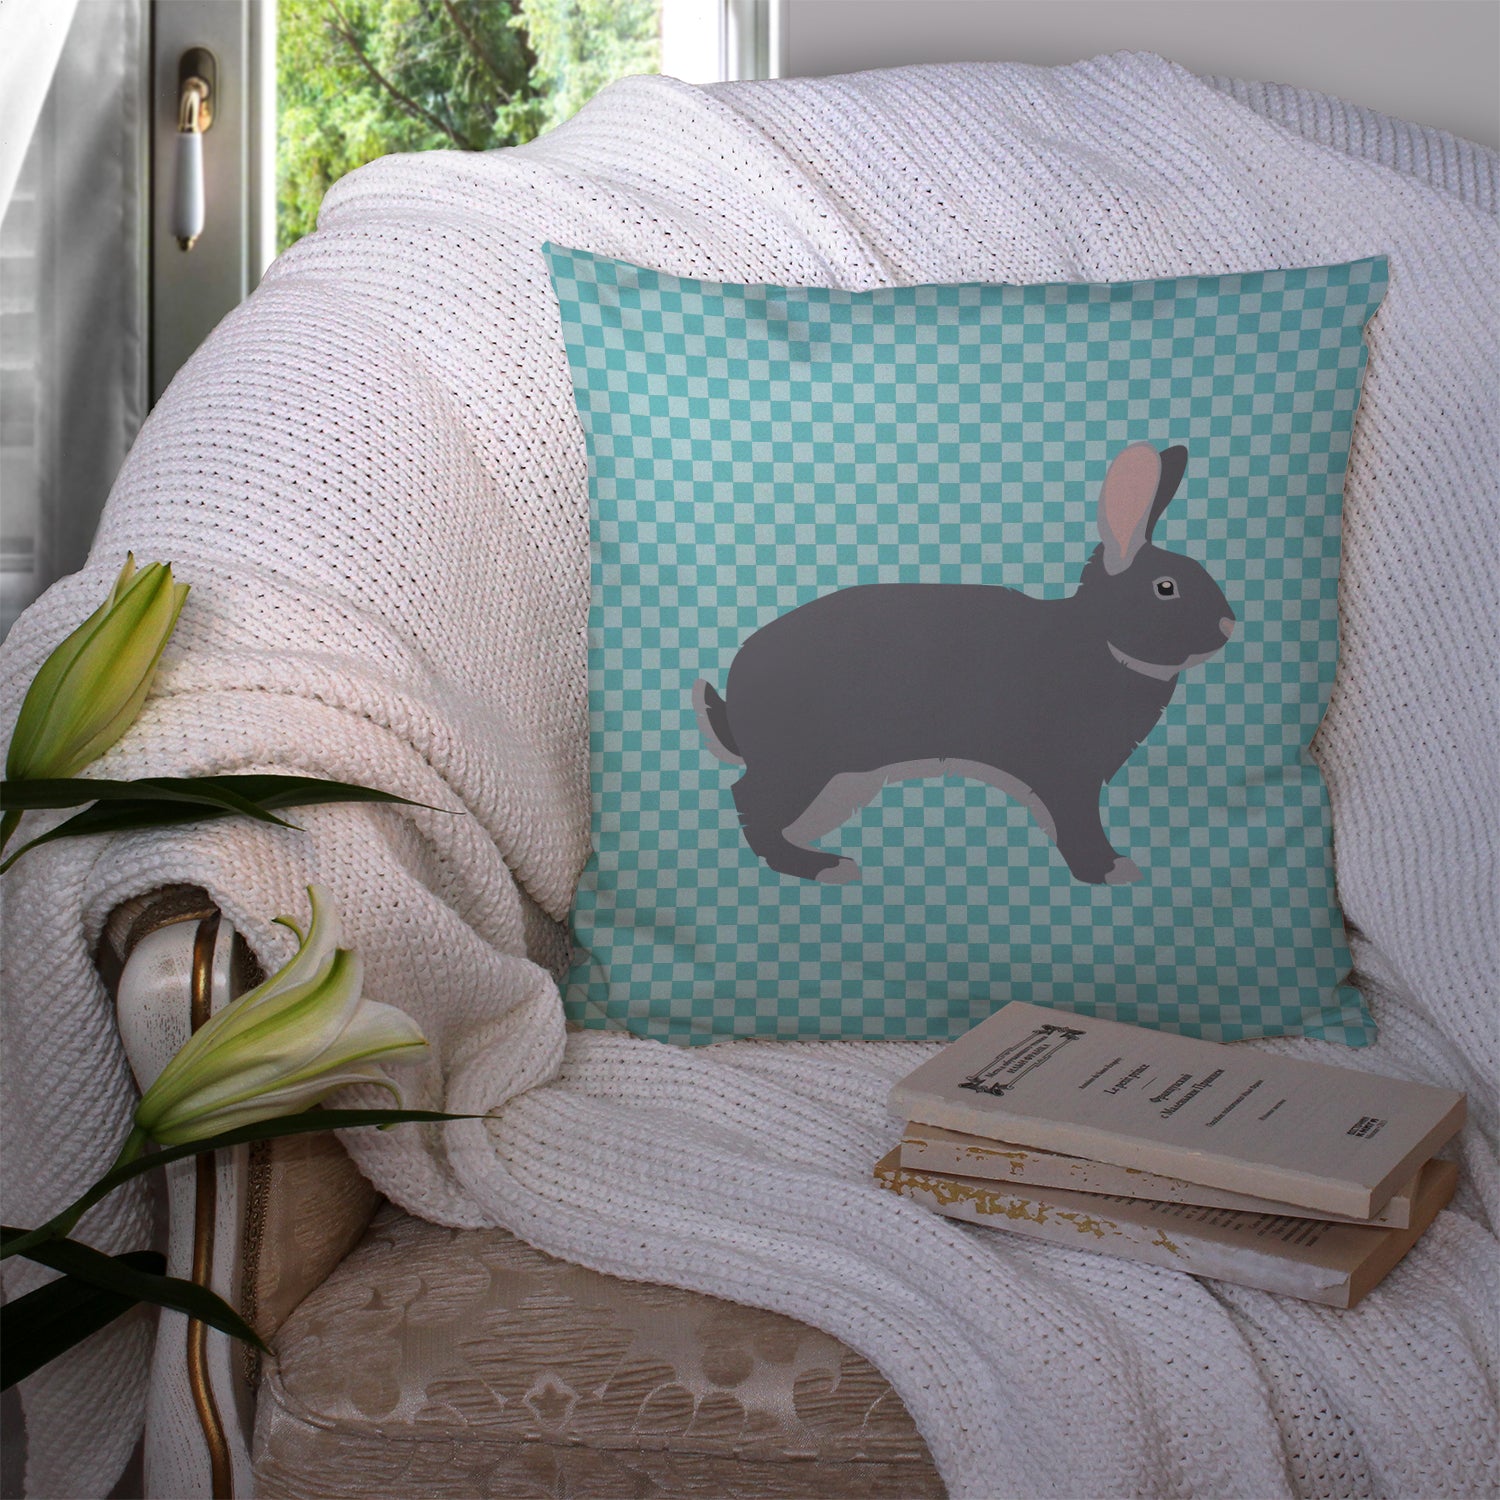 Giant Chinchilla Rabbit Blue Check Fabric Decorative Pillow BB8140PW1414 - the-store.com